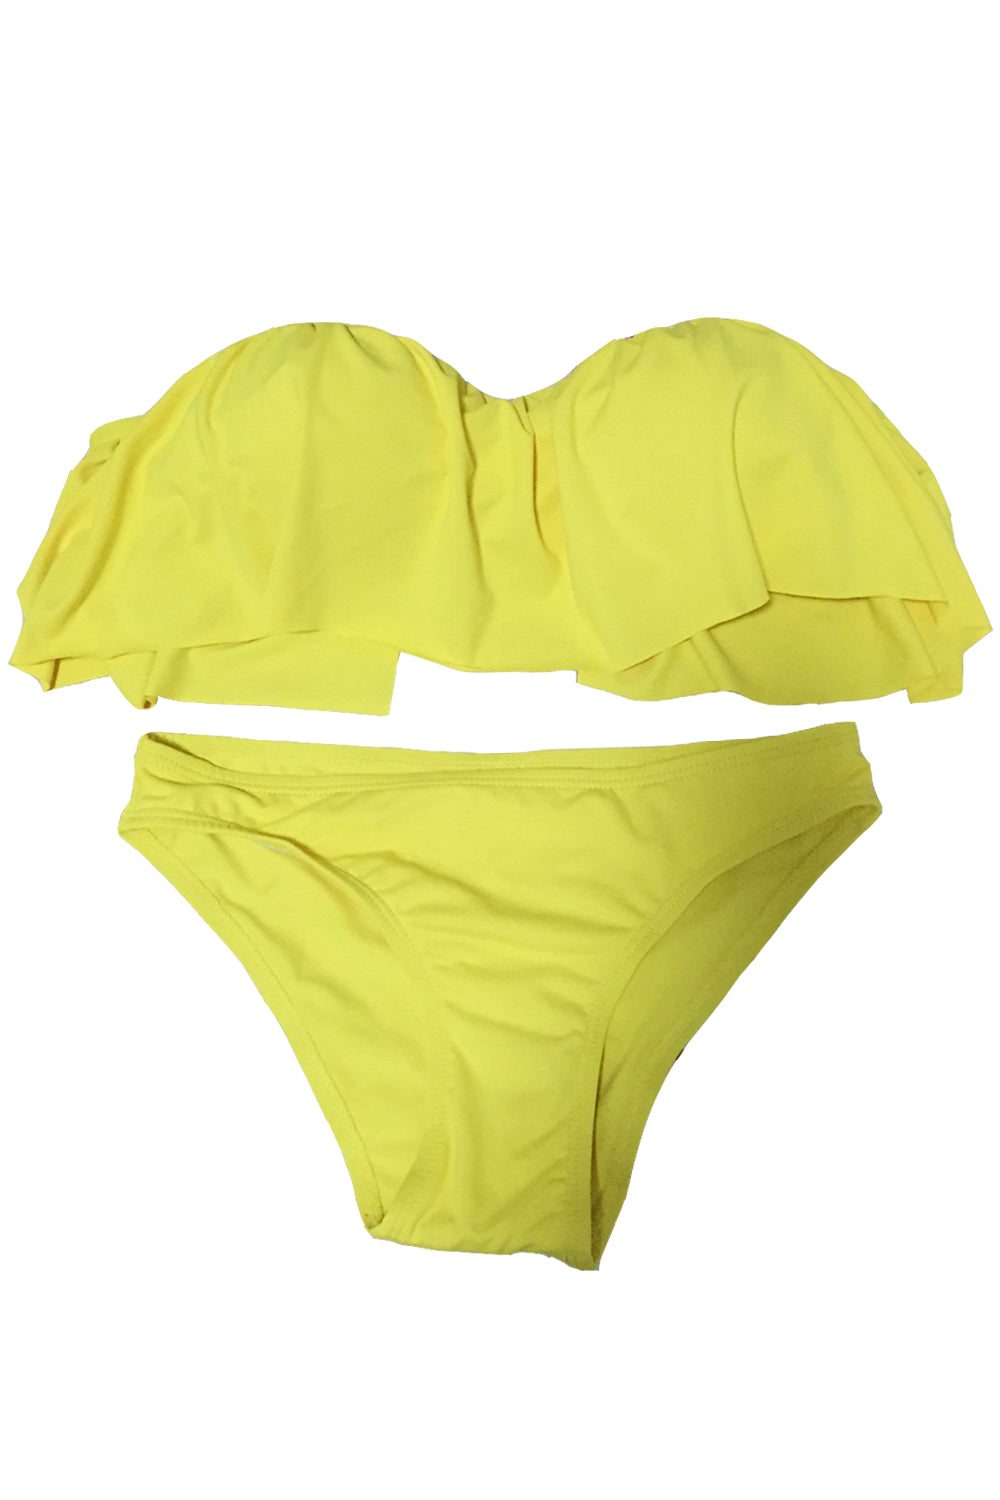 Iyasson Temptation Yellow Wave hem  Bikini Set